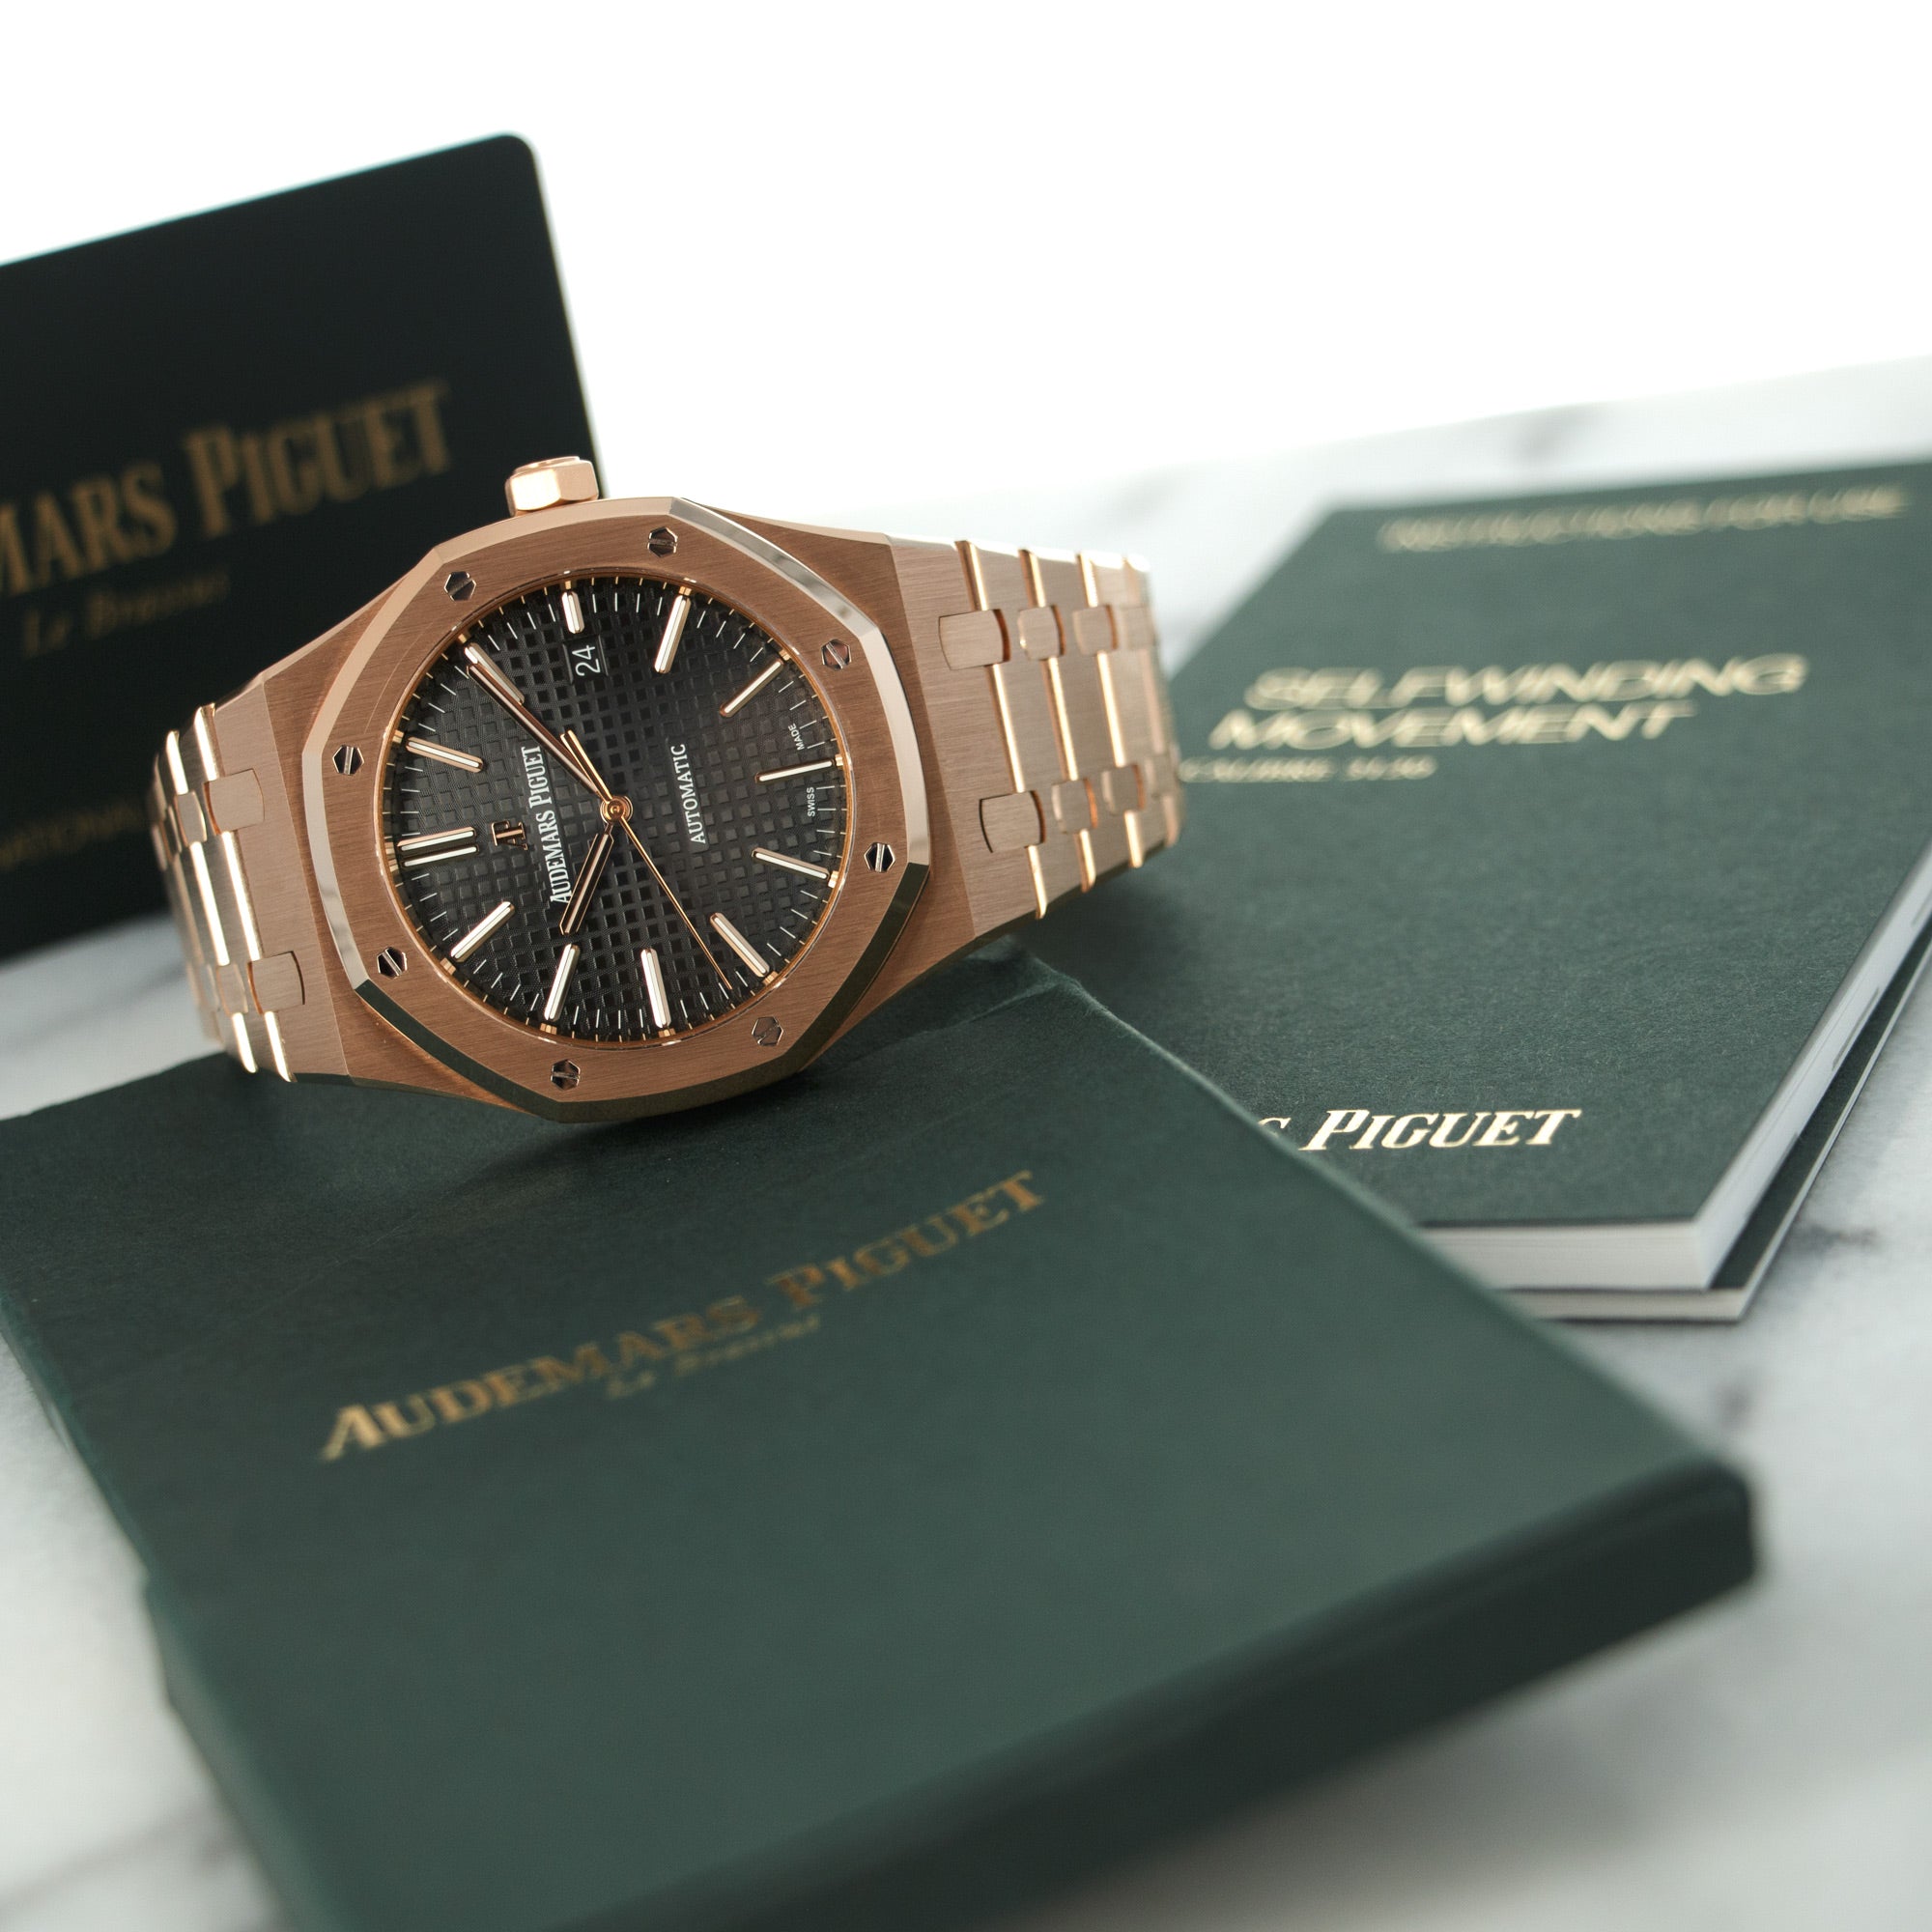 Audemars Piguet - Audemars Piguet Rose Gold Royal Oak Watch Ref. 15400 with Original and Papers - The Keystone Watches